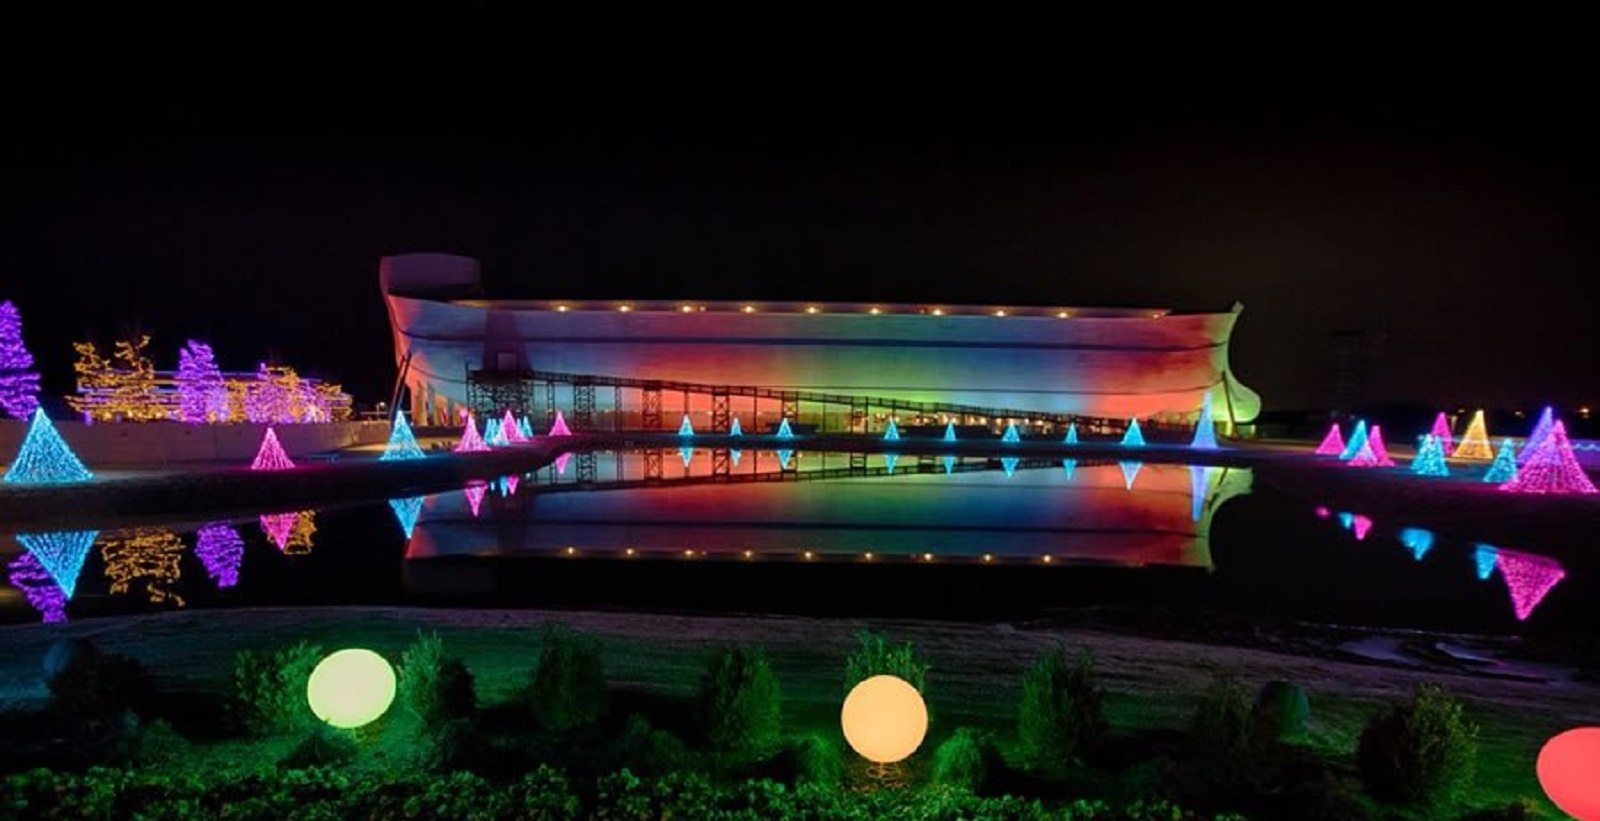 Noah's Ark Park lit up with Rainbow lights